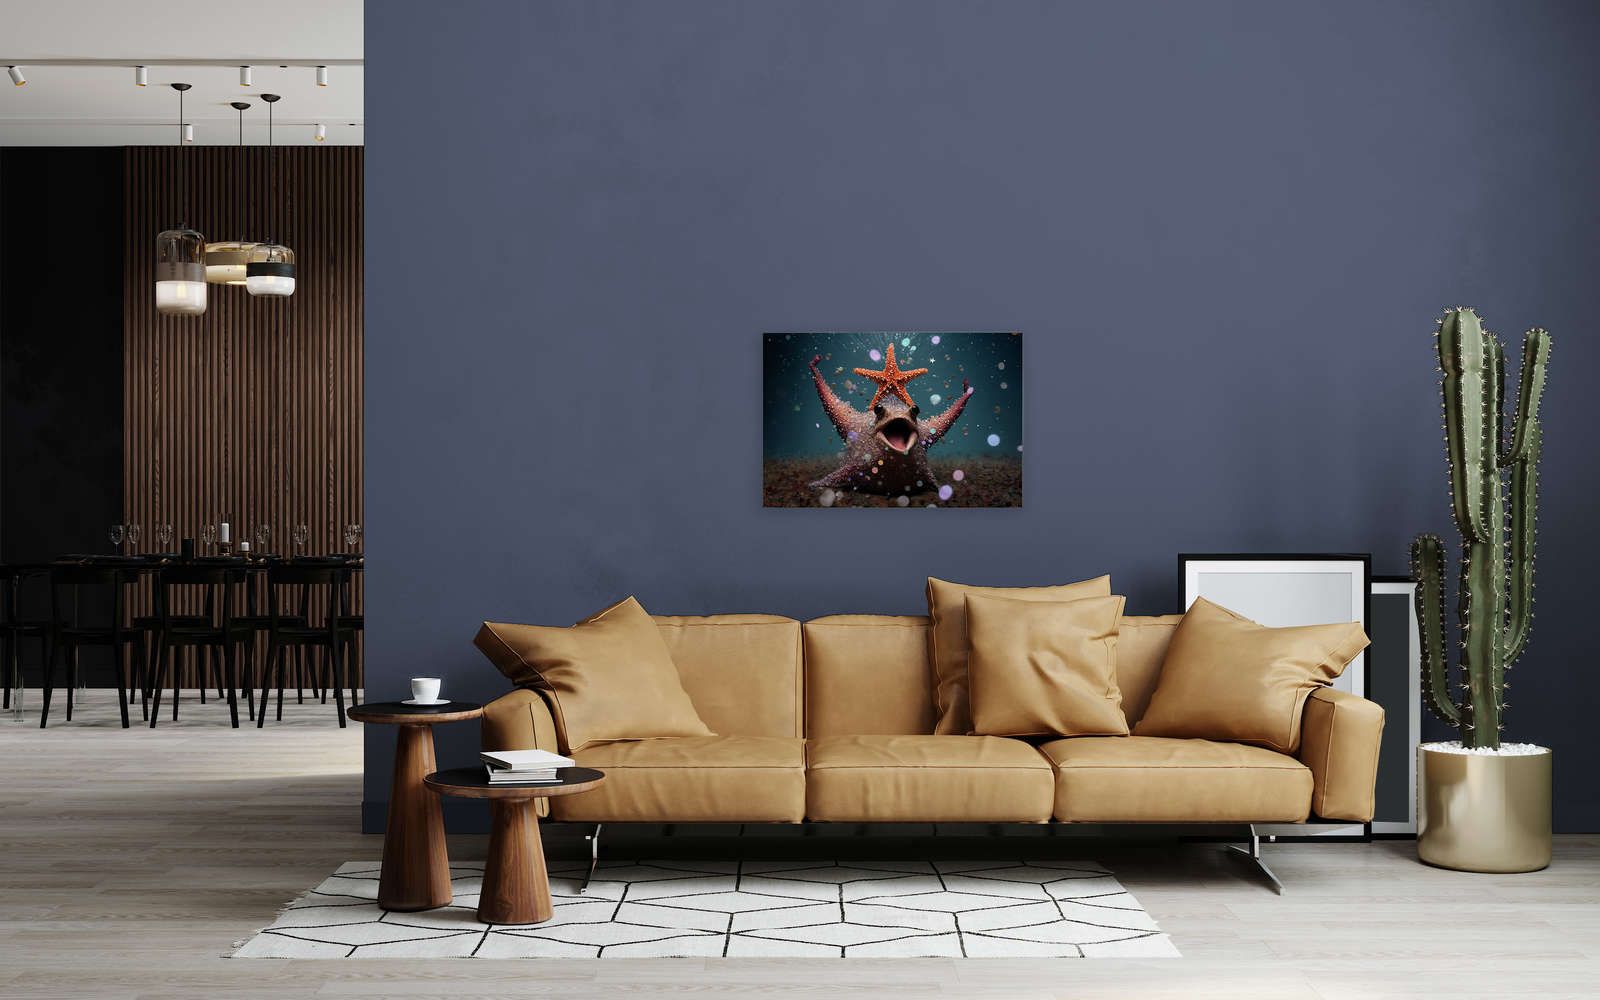             KI Canvas schilderij »feest zeester« - 90 cm x 60 cm
        